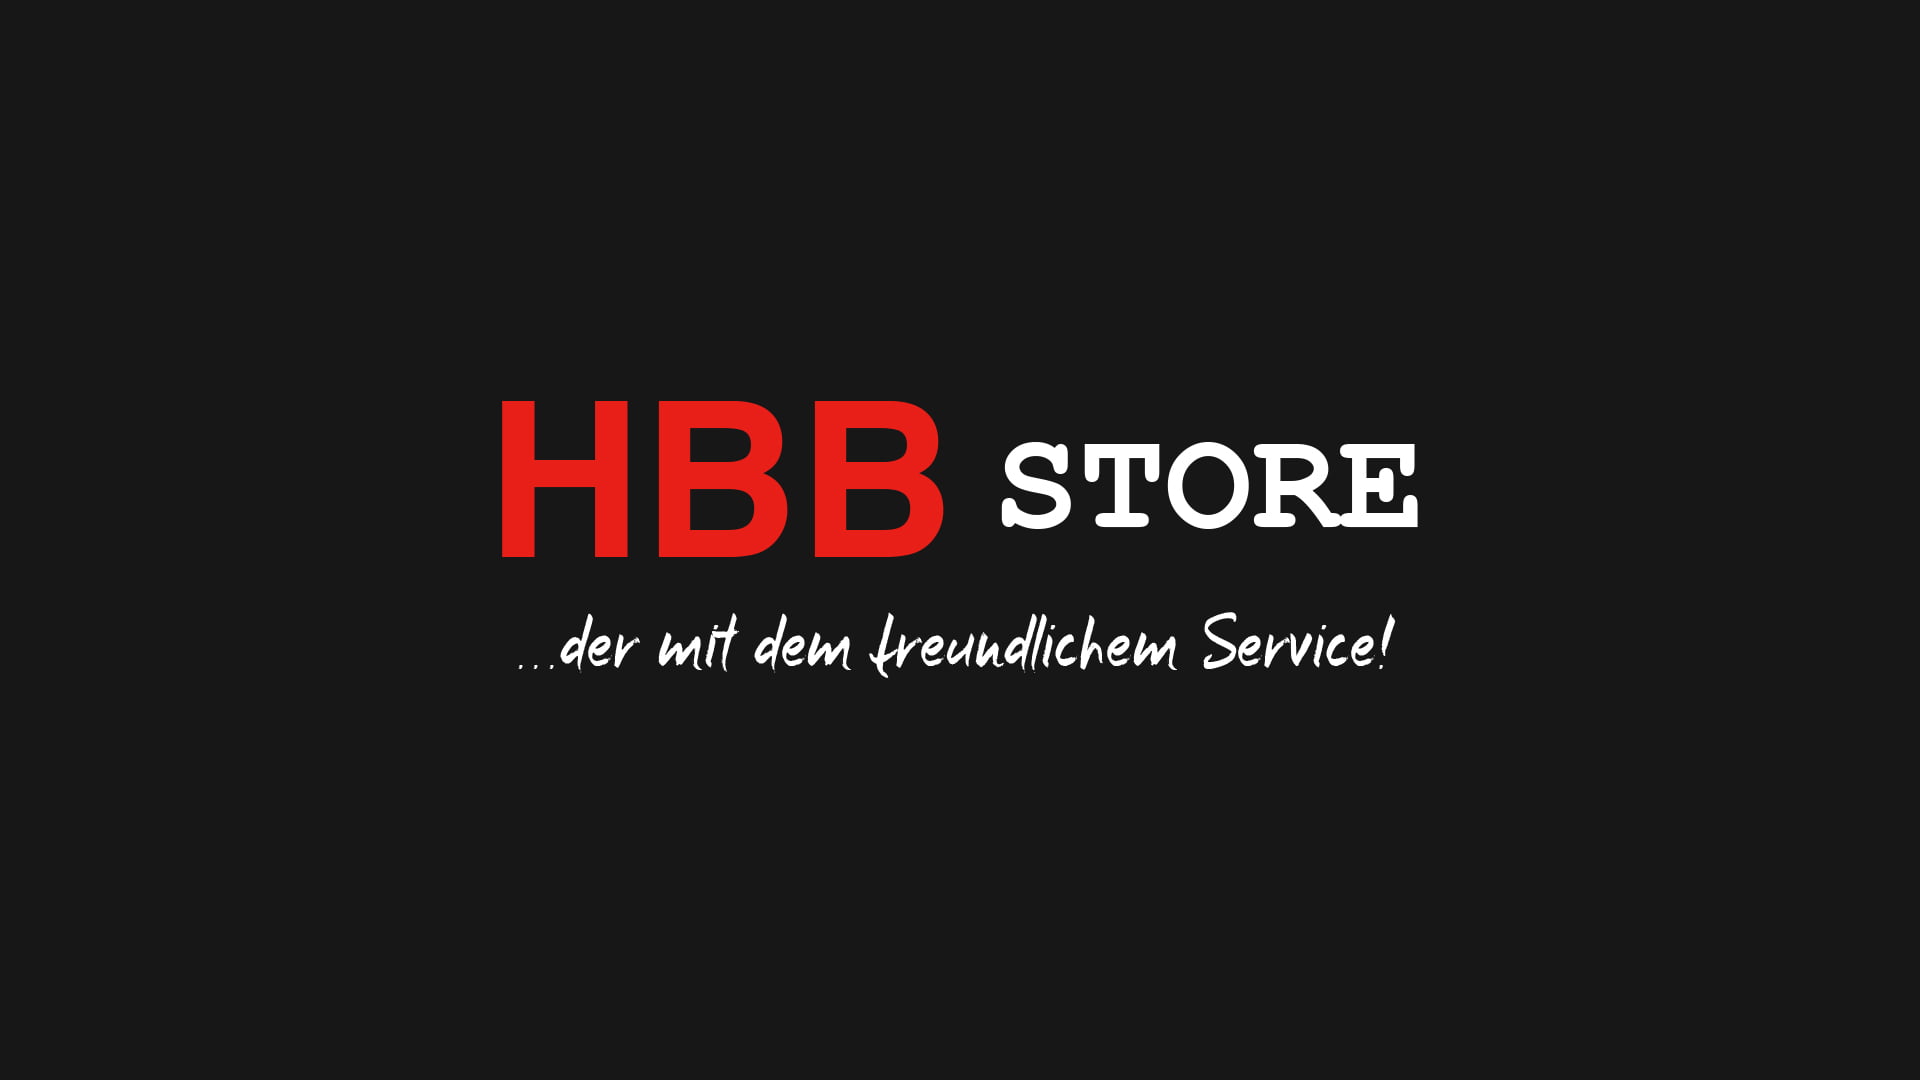 HBB Stores